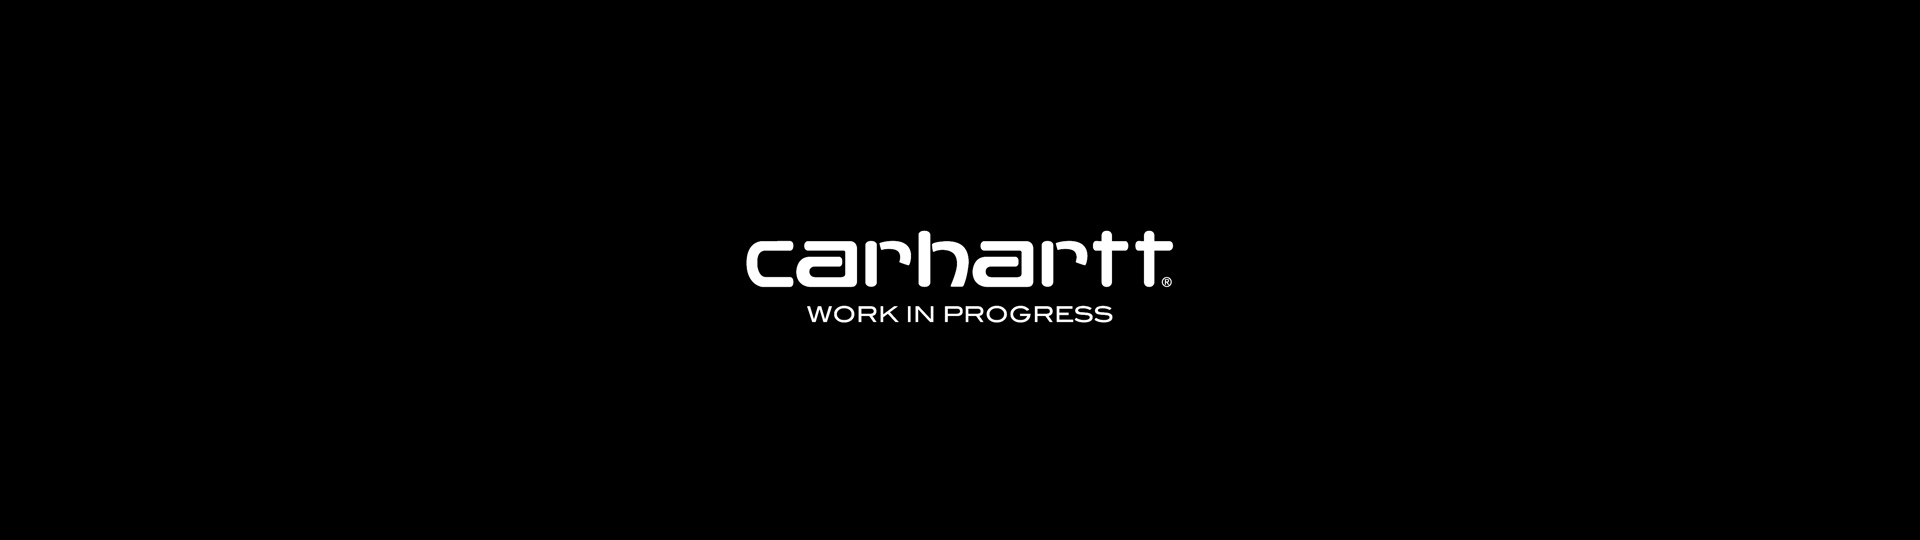 Carhartt-wide-2